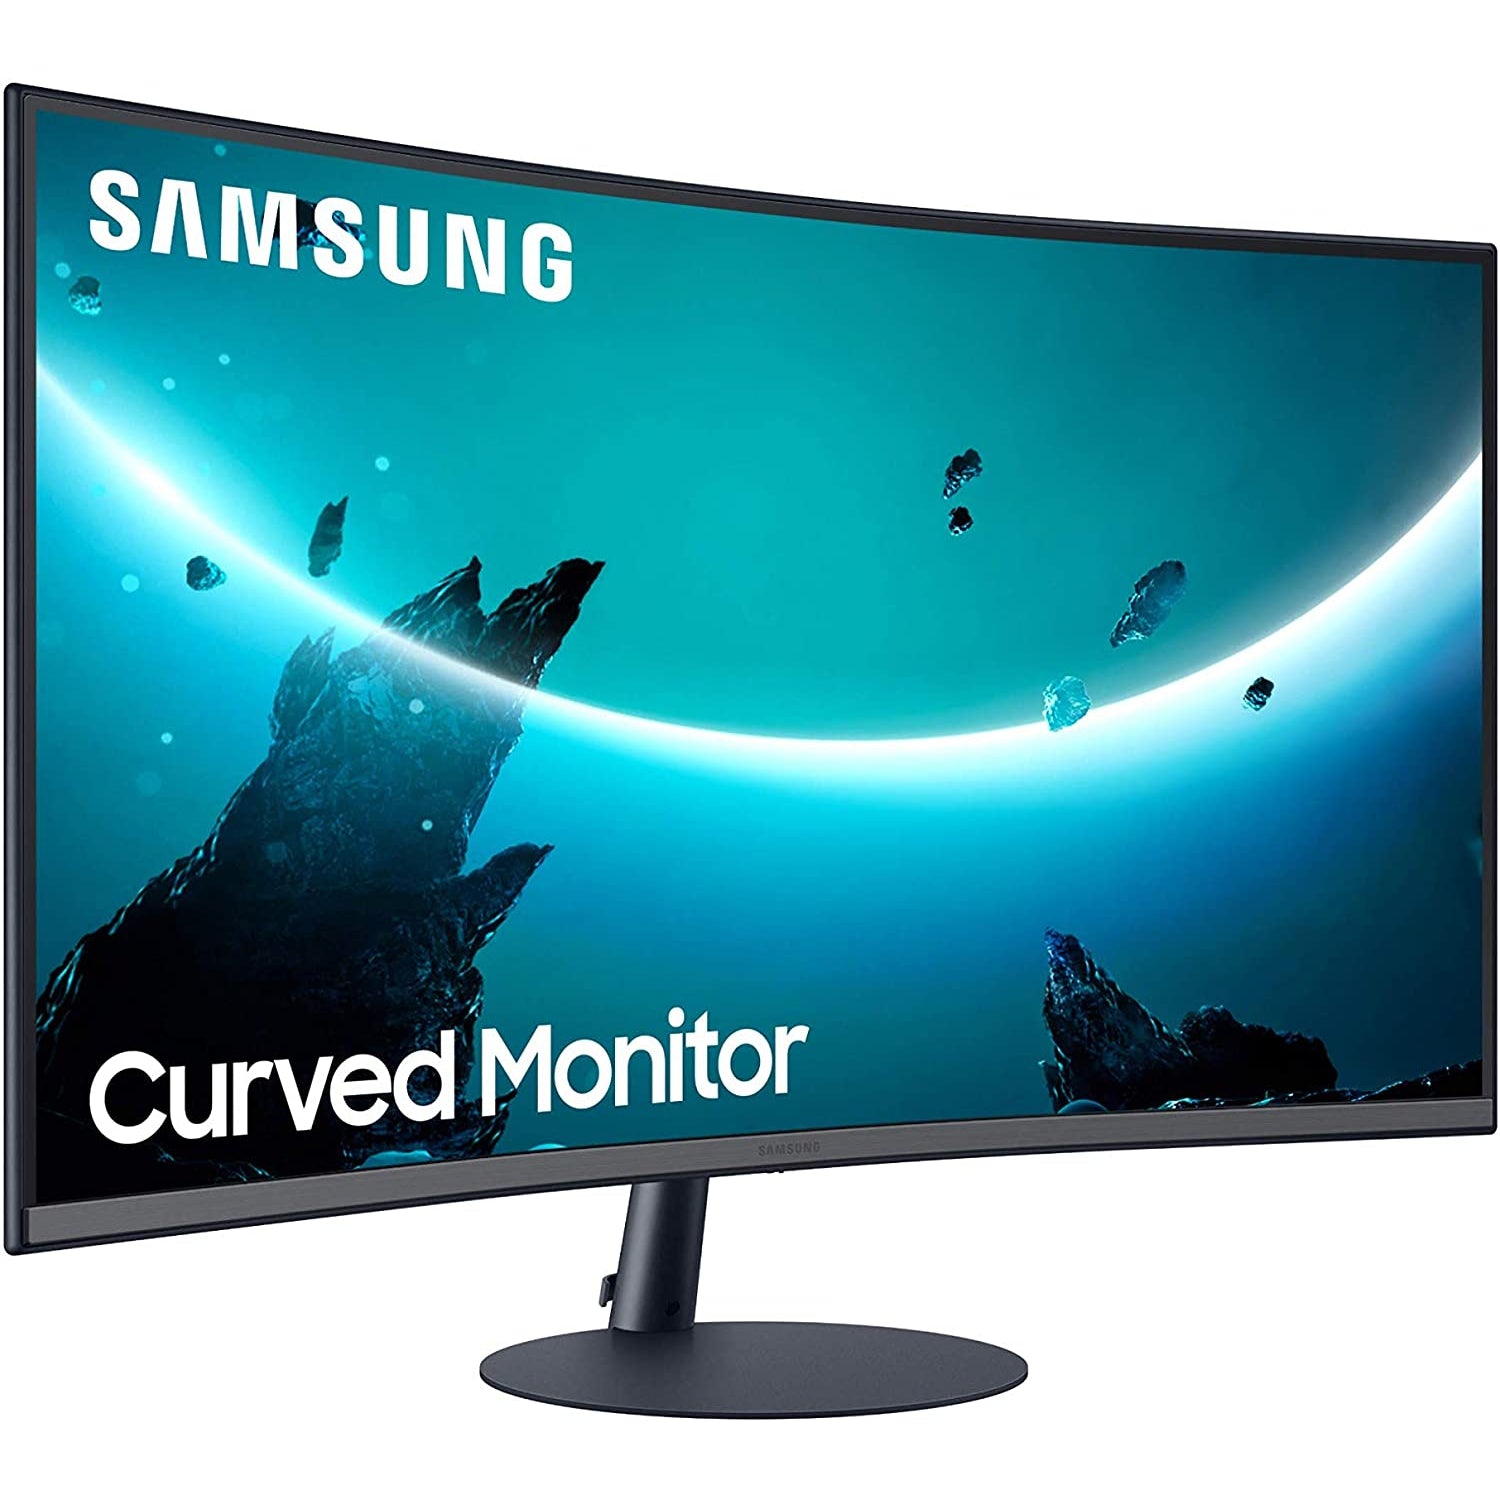 Samsung T55 Curved Monitor, 24 Inch, 1000R, 75hz, 4ms, 1080p, Dark Blue Grey